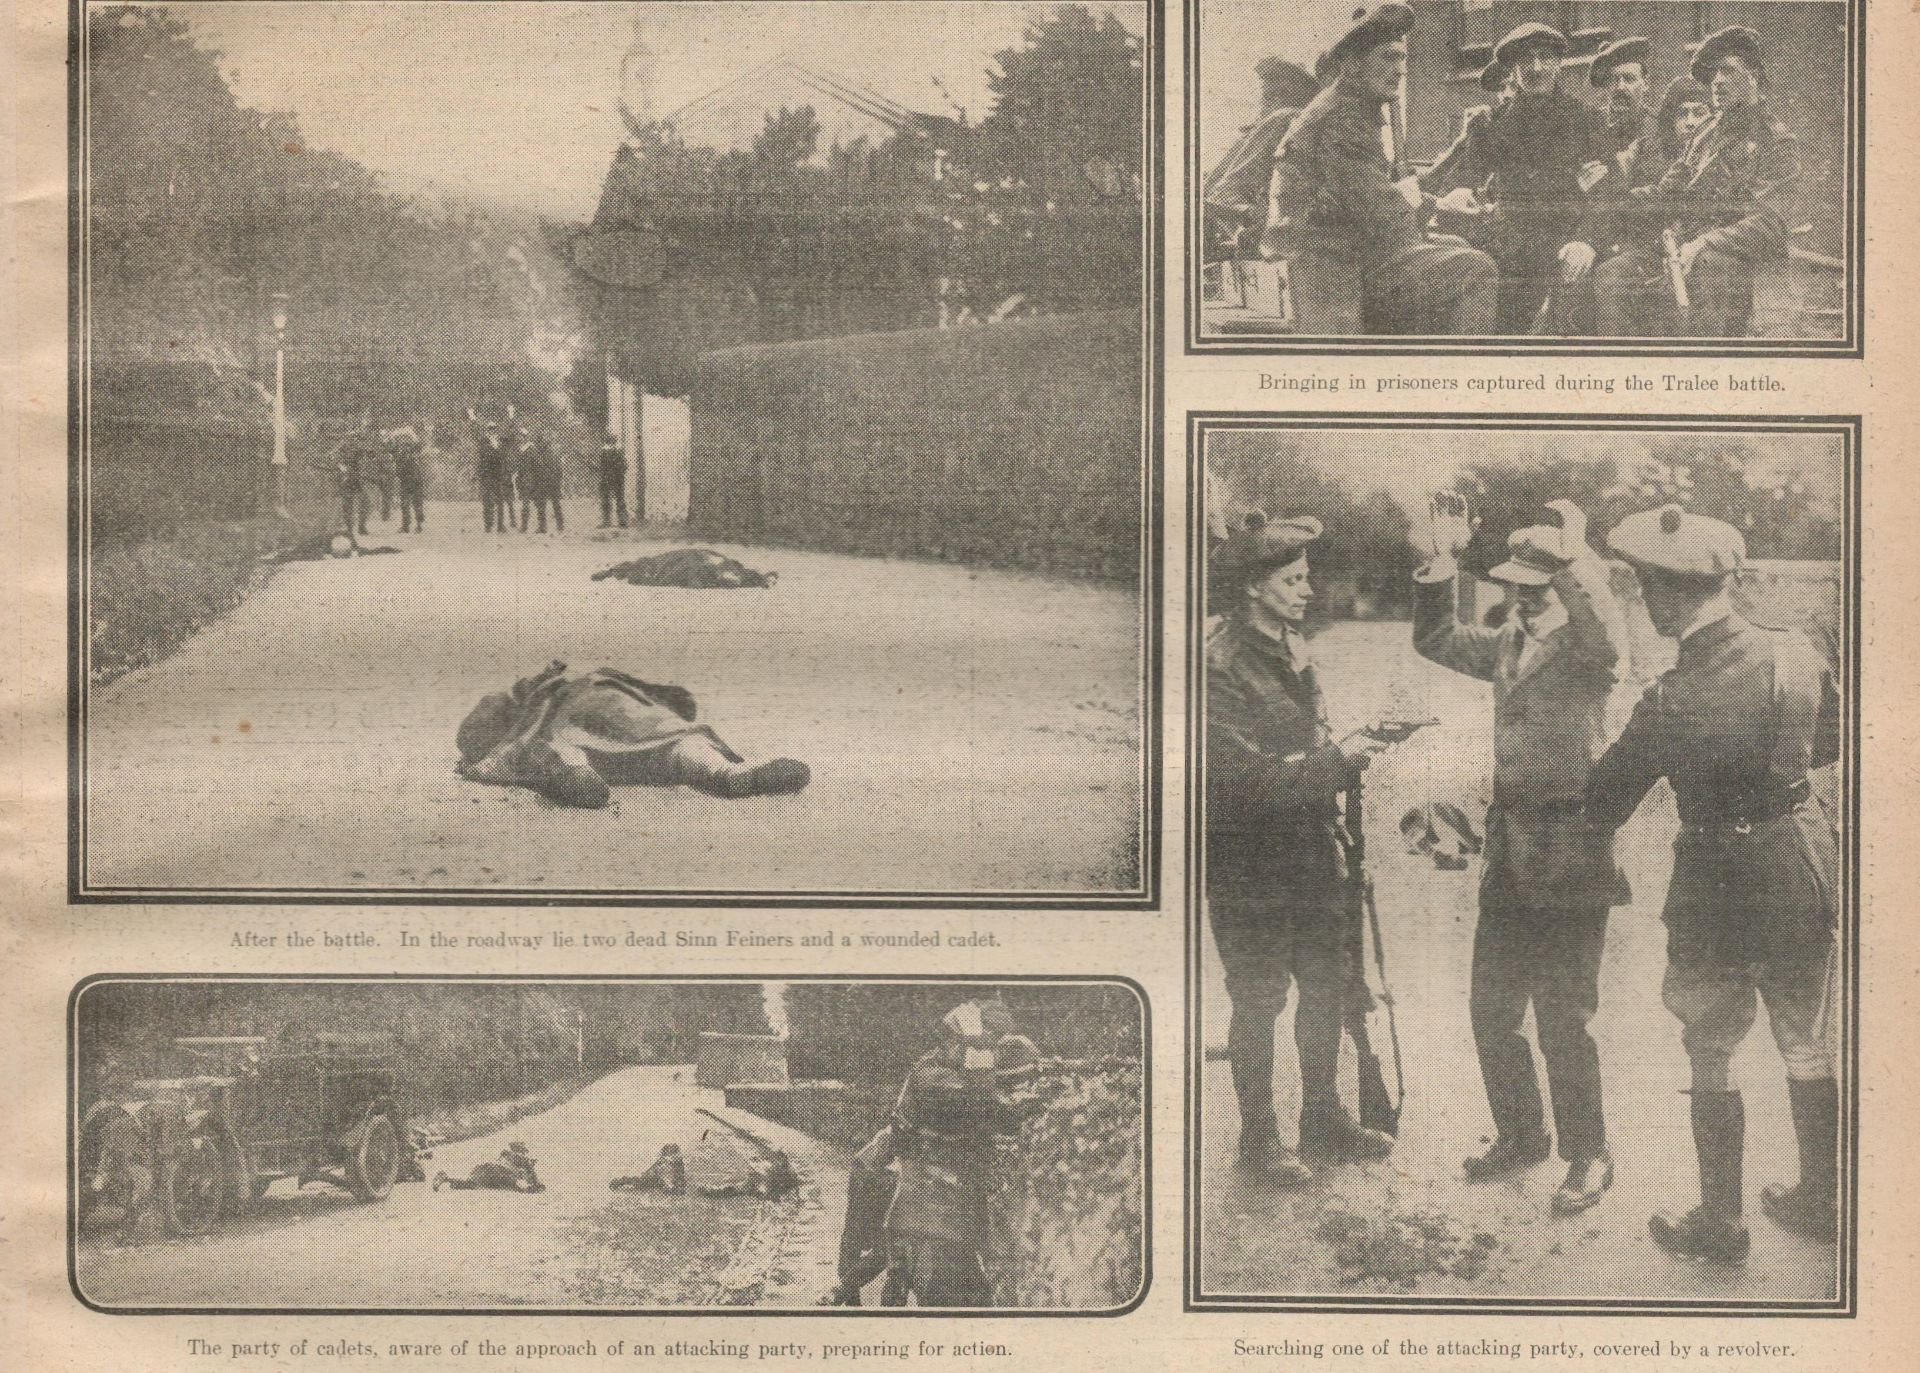 Battle of Tralee Irish War of Independence Sinn Fein Fake News Story 1920 - Image 2 of 6